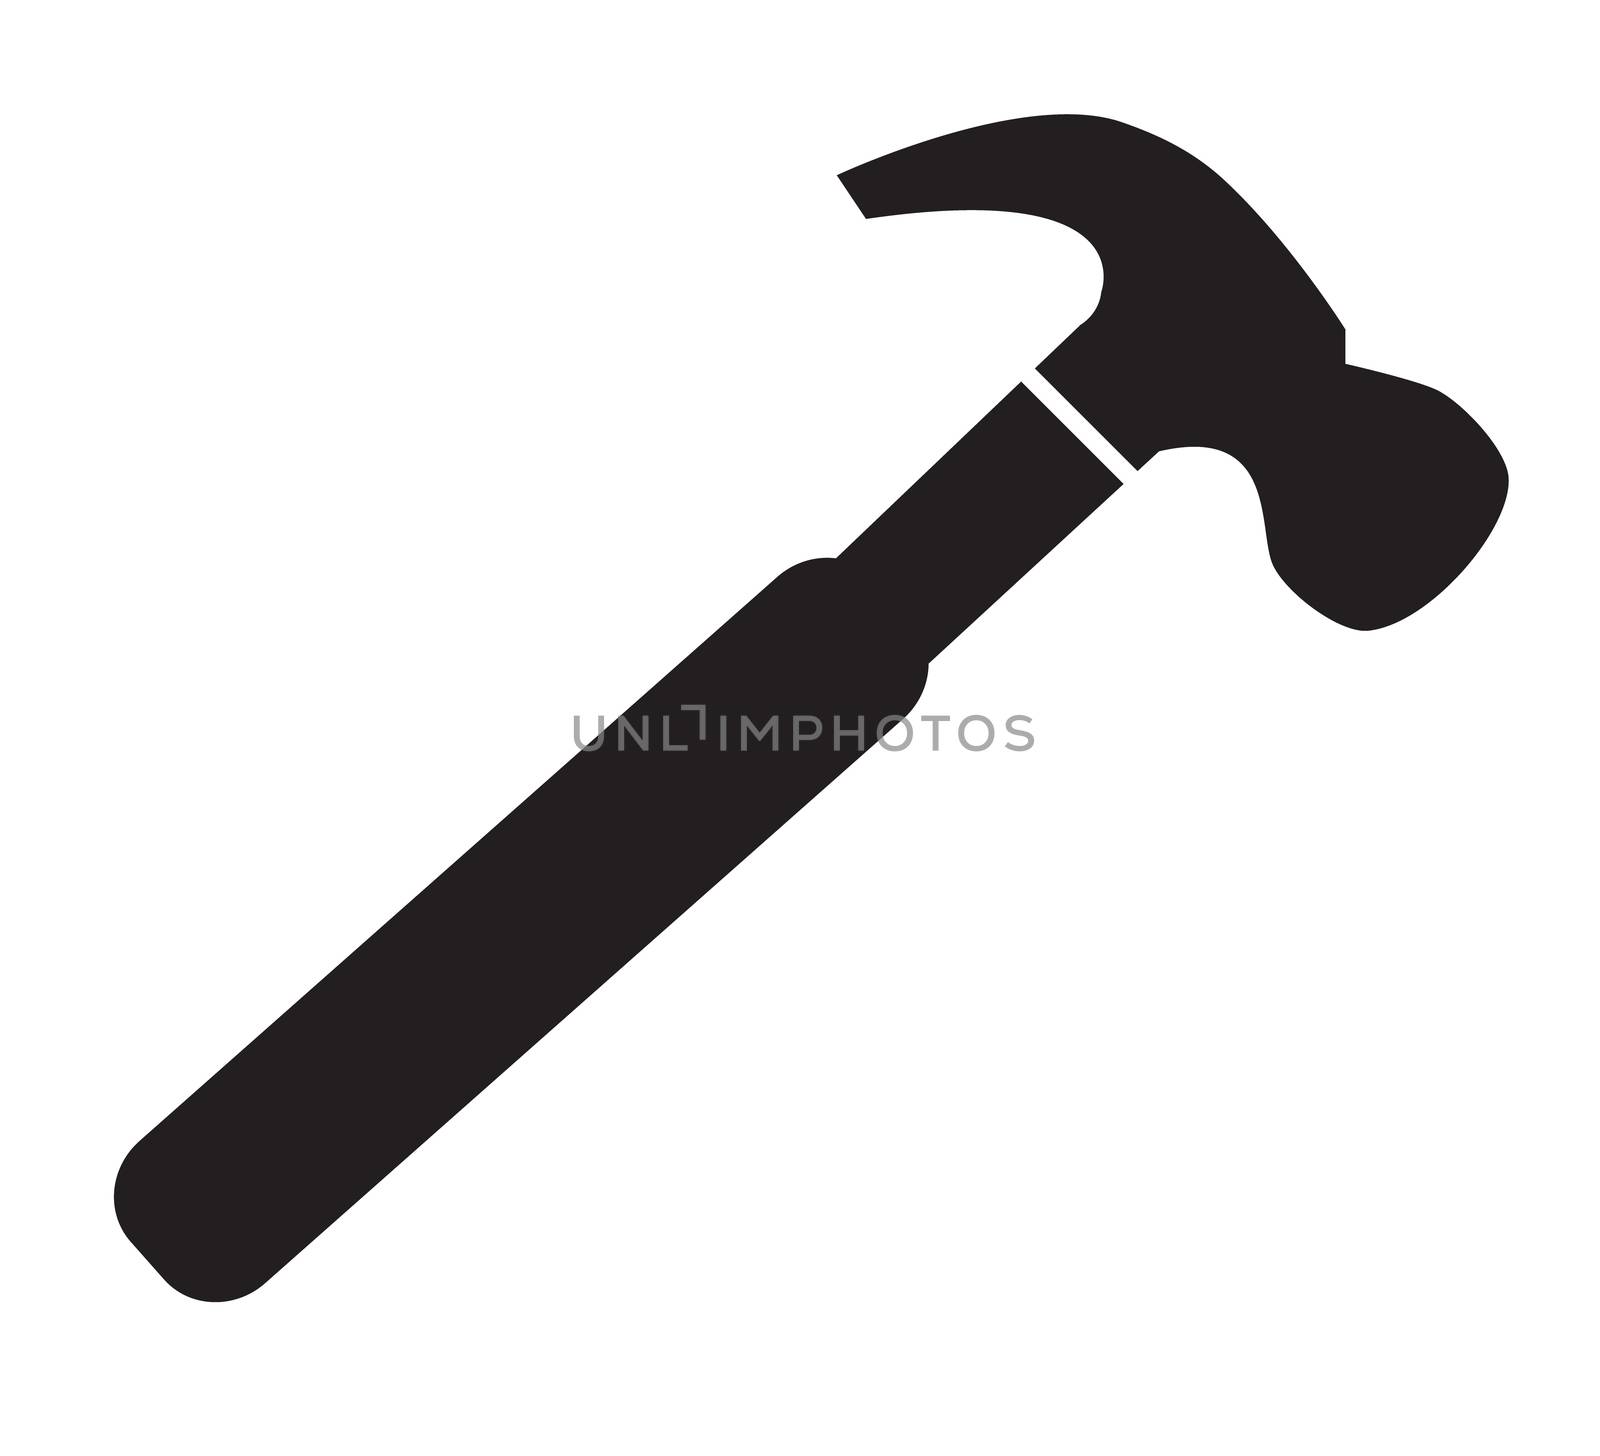 hammer icon on white background. hammer sign. flat style design.